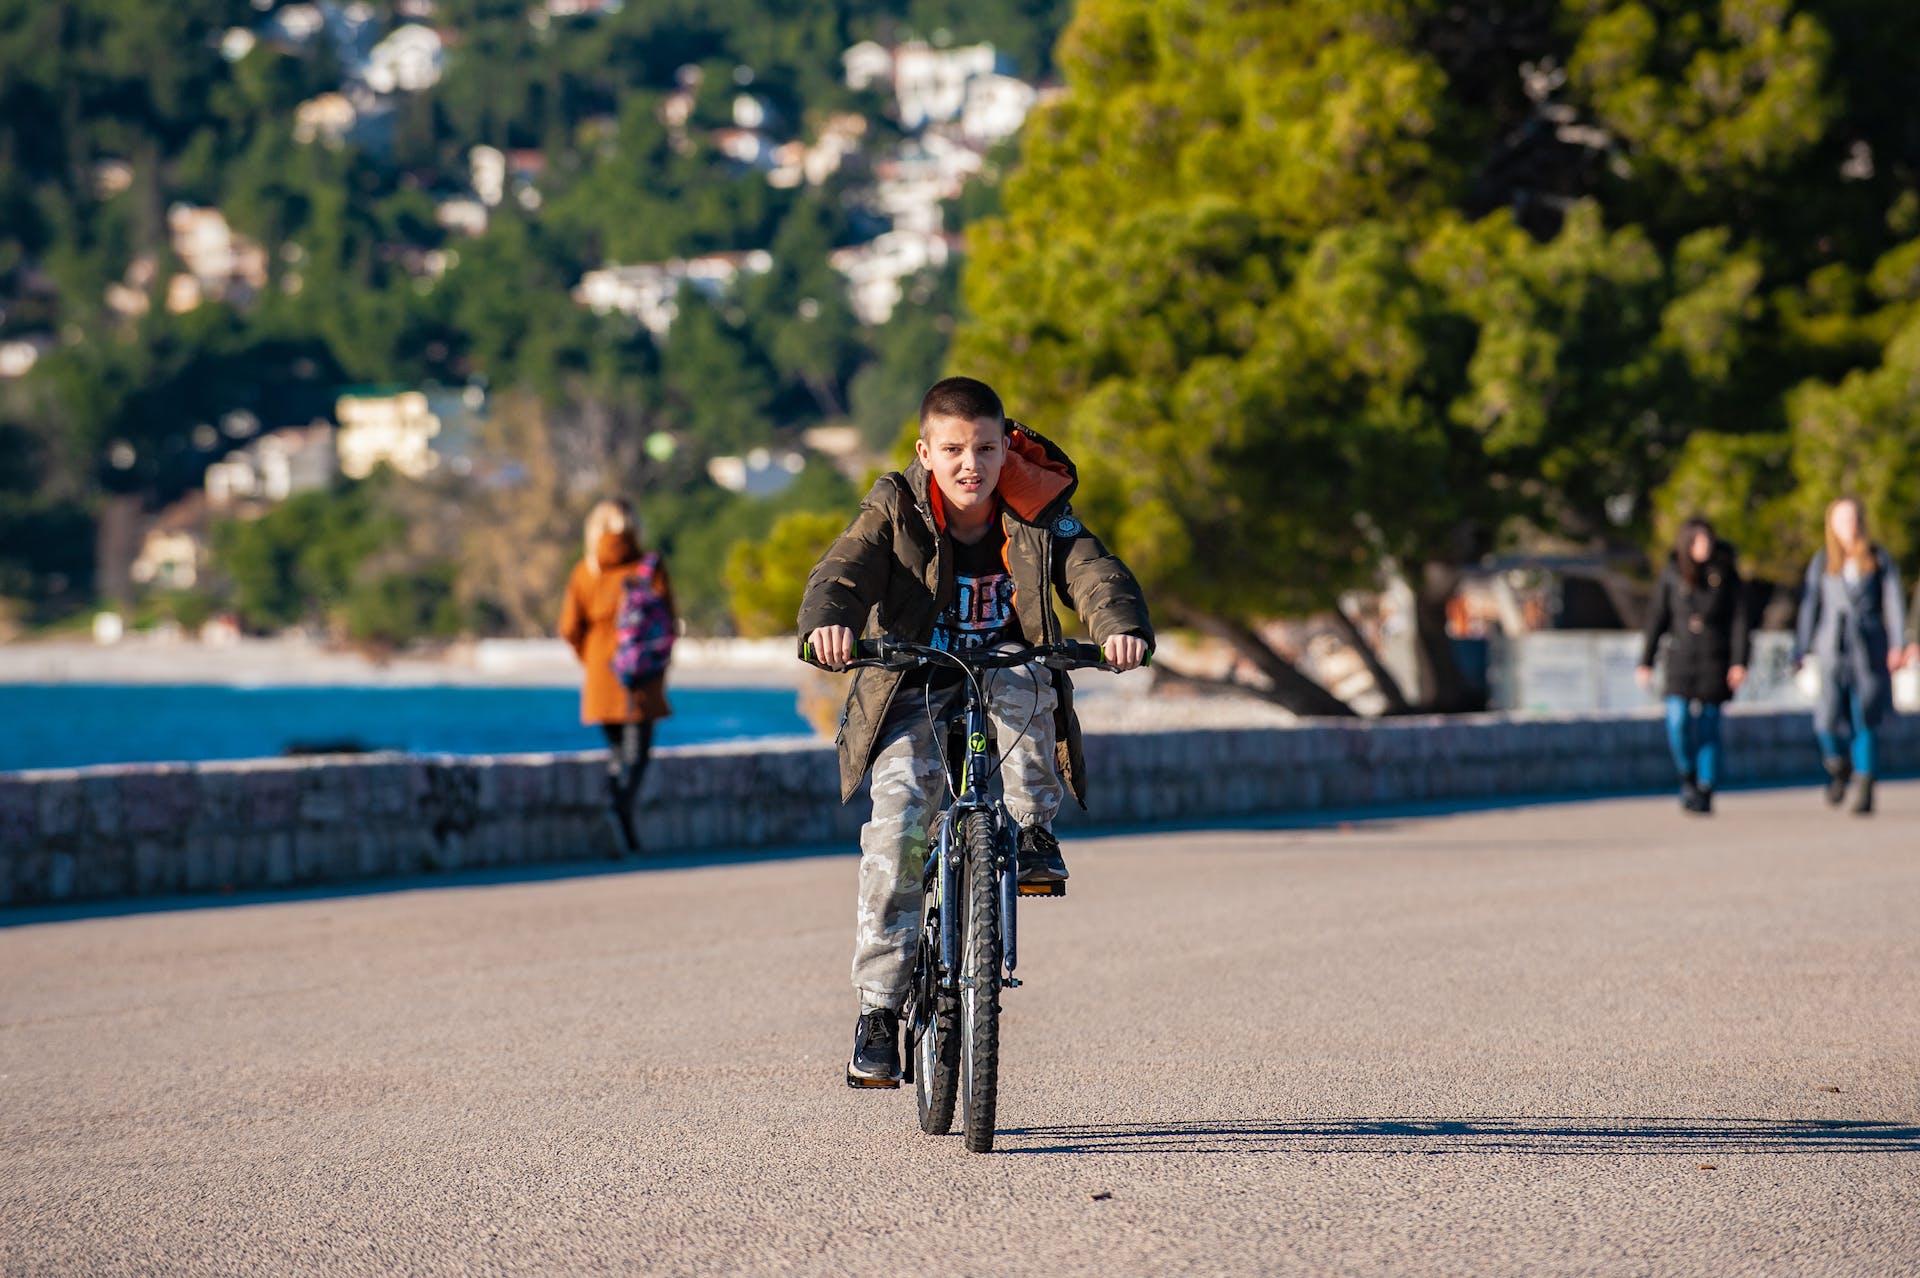 A boy riding a bicycle | Source: Pexels